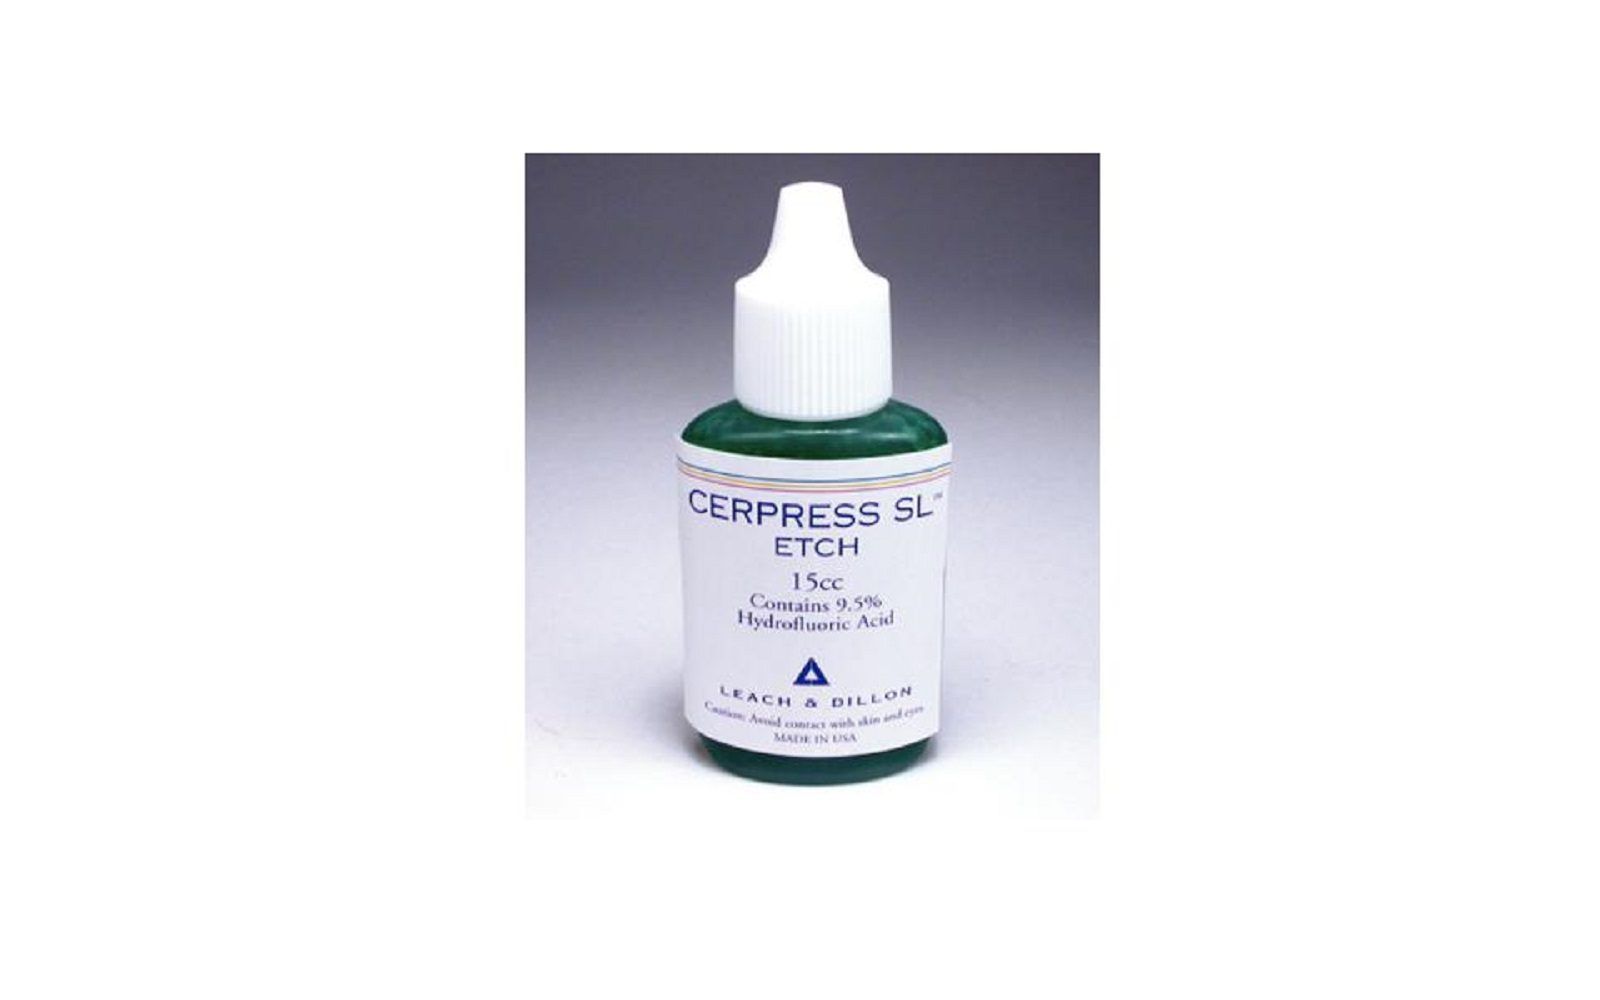 Cerpress sl etching gel – 9. 5% hydrofluoric acid, 5 cc bottle